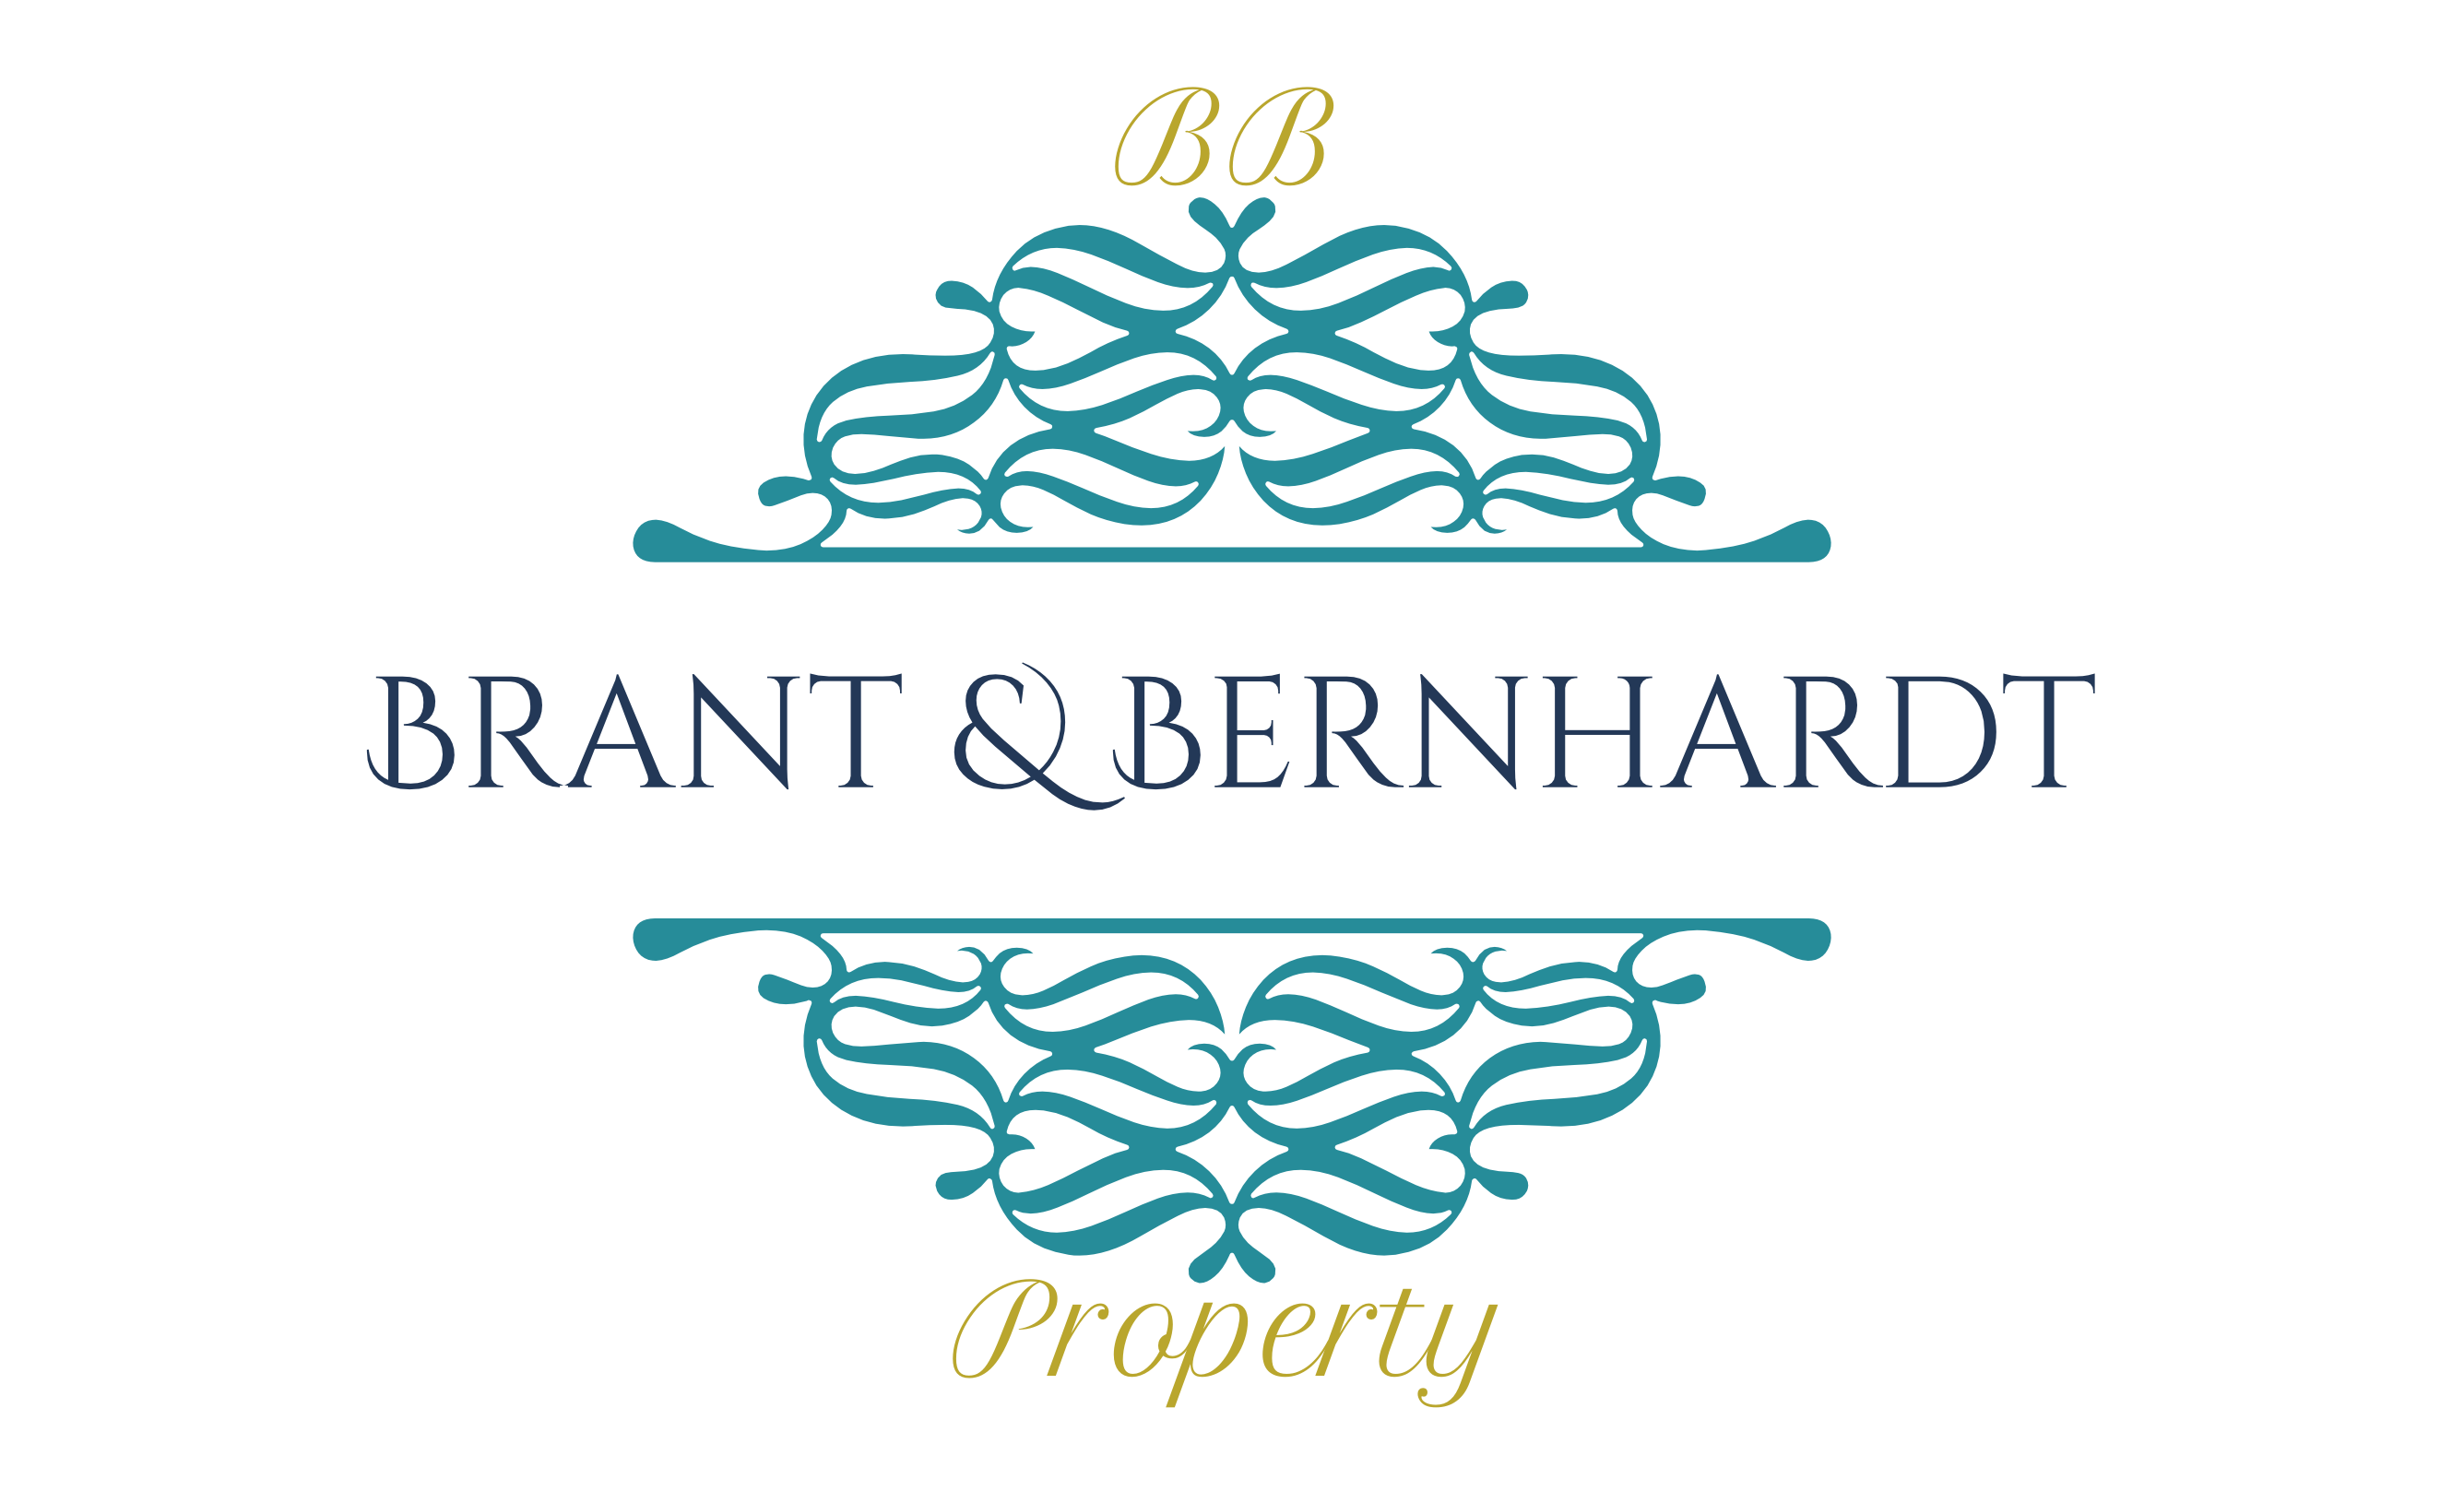 Brant & Bernhardt Property